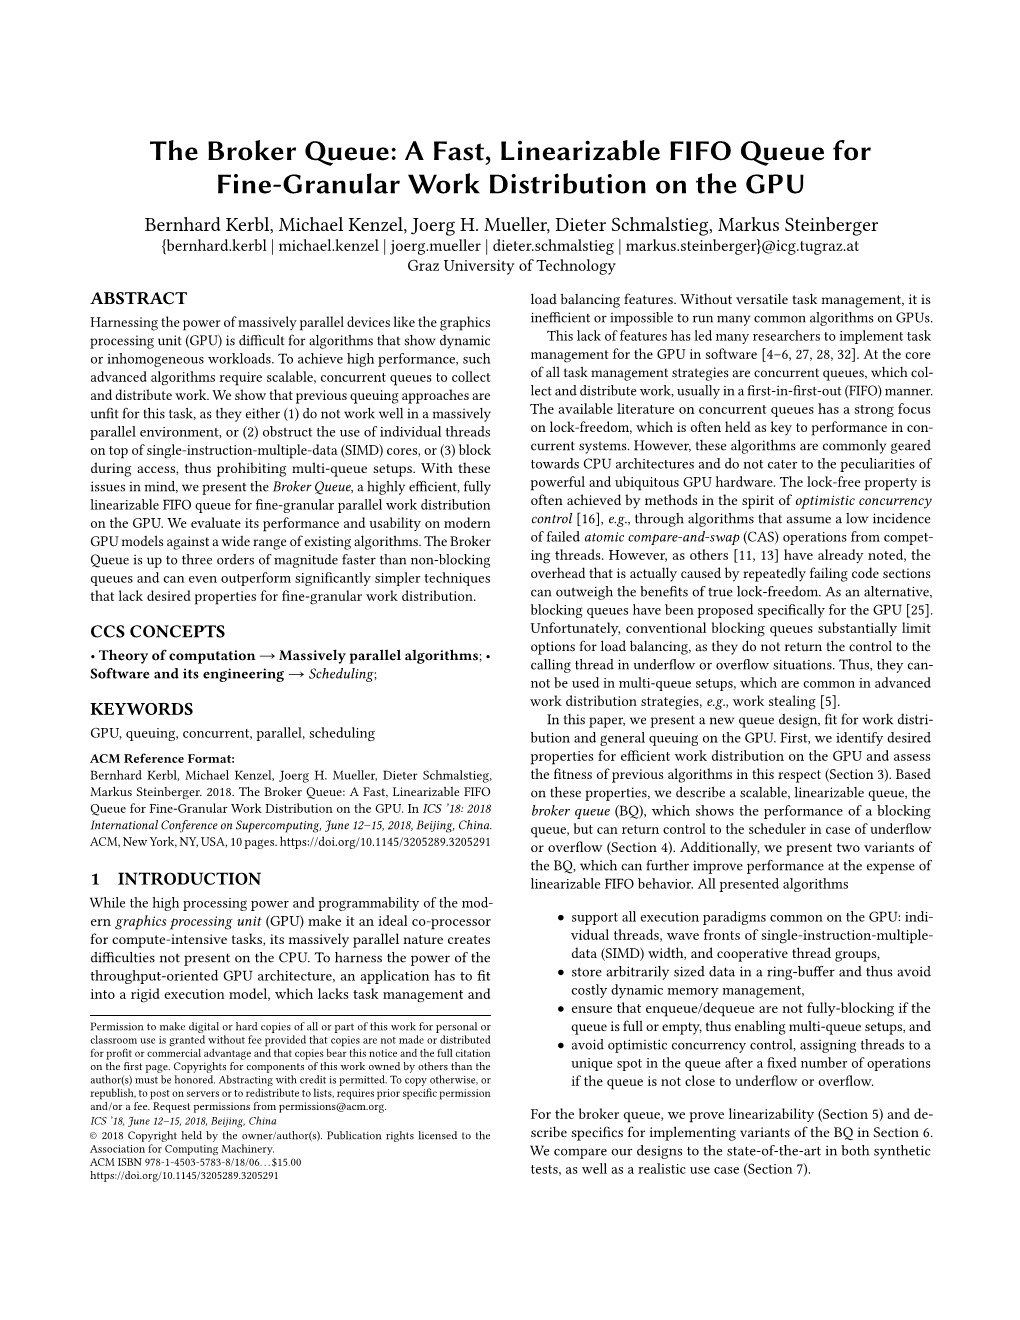 The Broker Queue: a Fast, Linearizable FIFO Queue for Fine-Granular Work Distribution on the GPU Bernhard Kerbl, Michael Kenzel, Joerg H